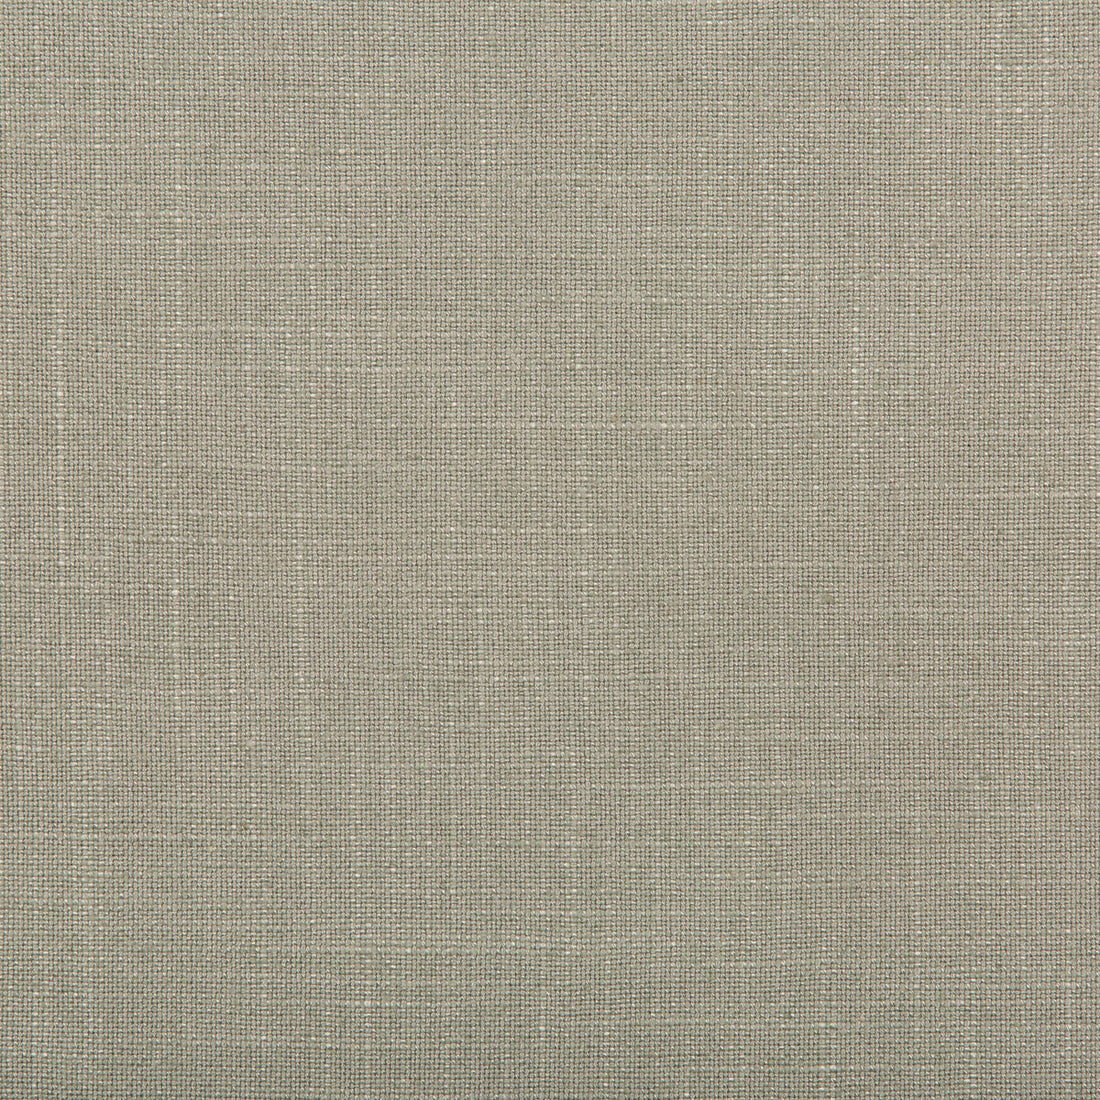 Aura fabric in sterling color - pattern 35520.121.0 - by Kravet Design